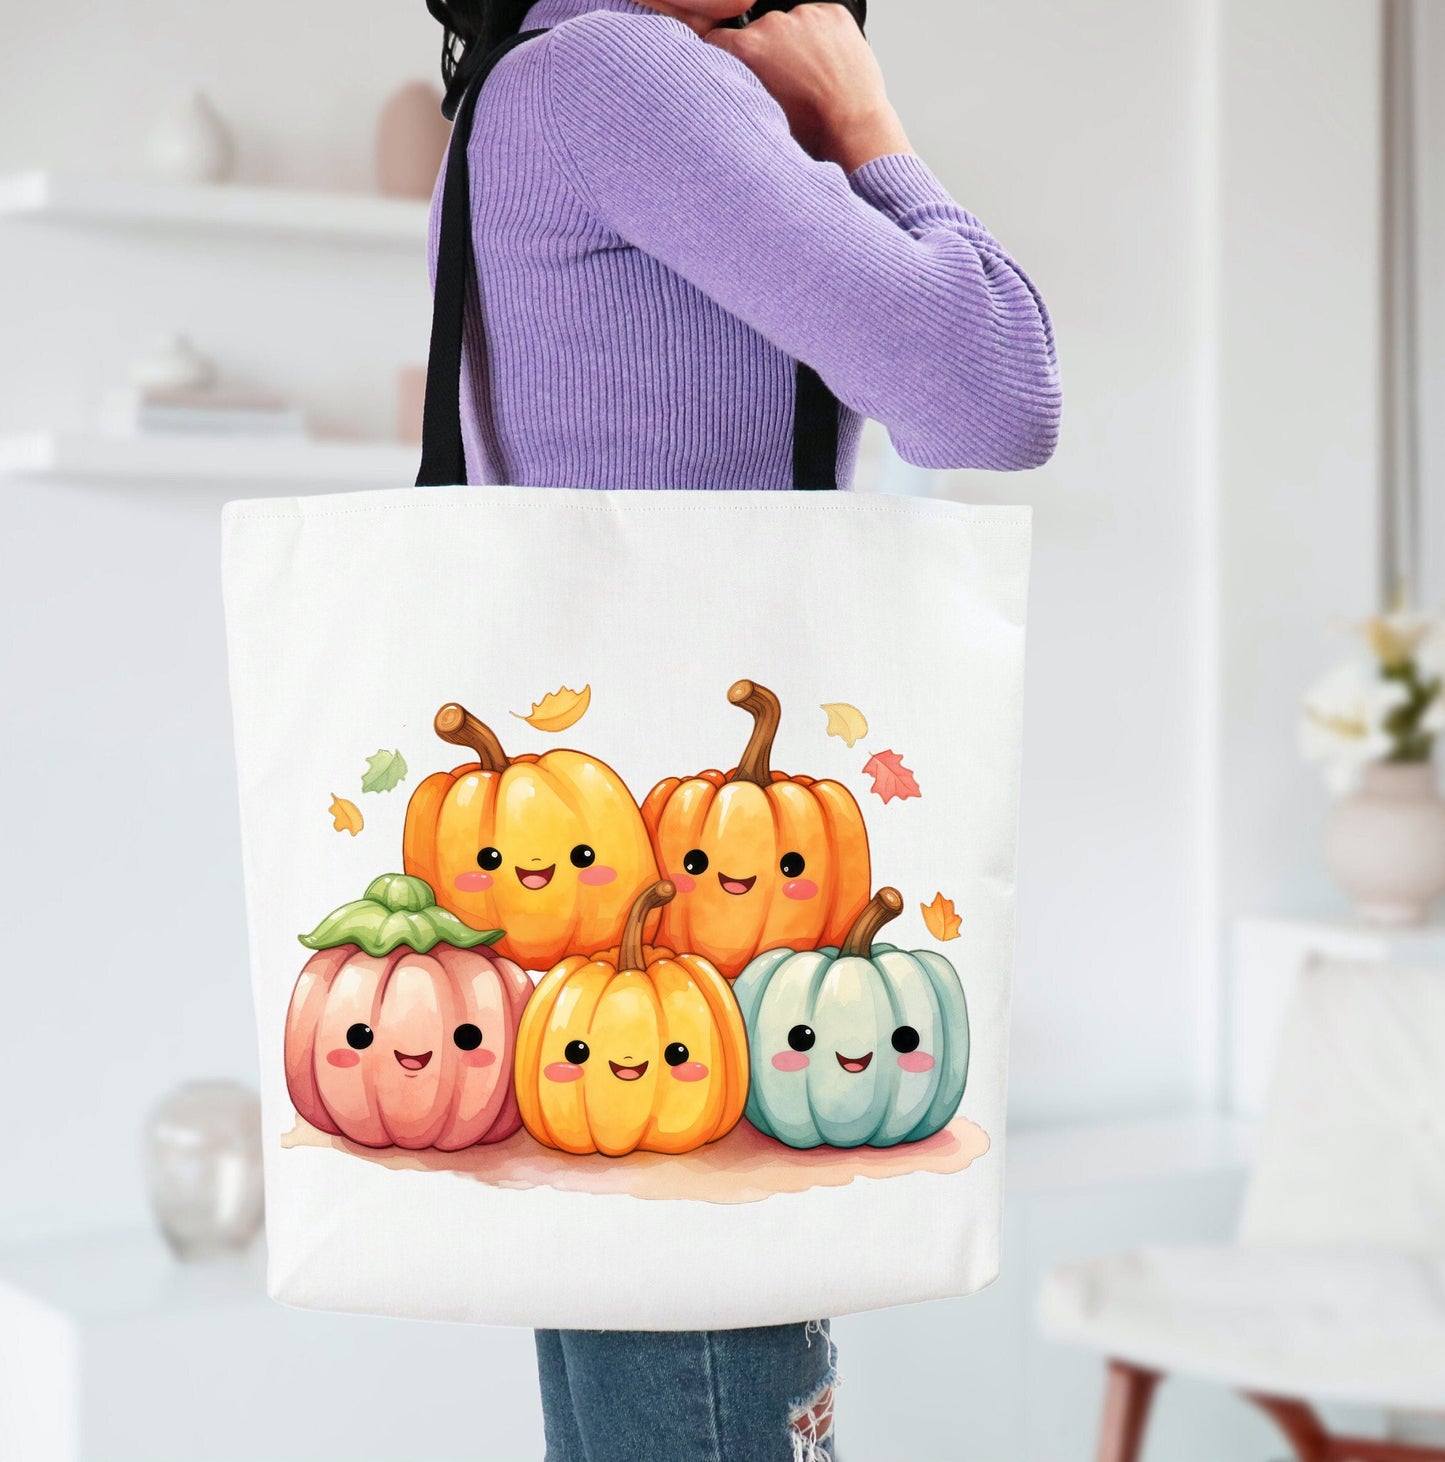 Adorable Tote bag with cute Pumpkins, Pumpkins Tote bag for any Occassion, Cute Pumpkin Tote bag for Halloween,  Mens, Womens, Kids Tote bag